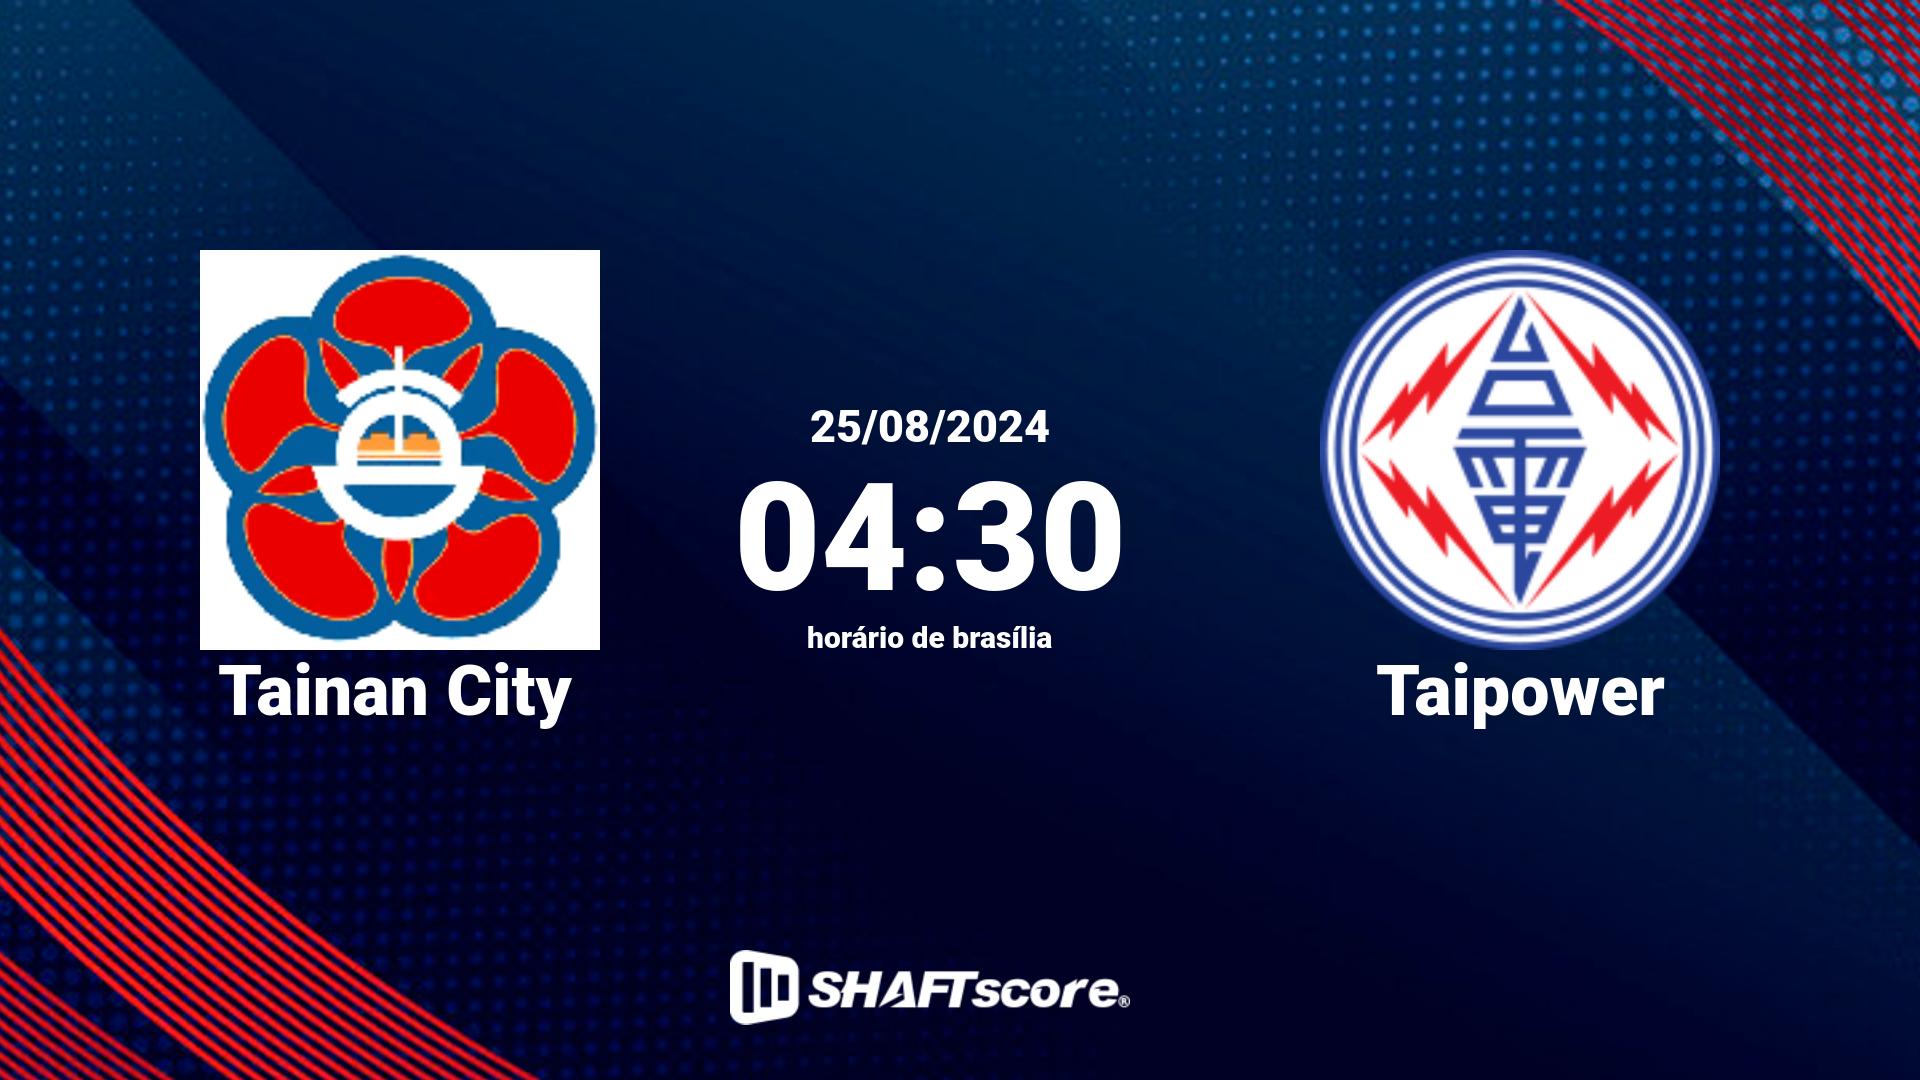 Estatísticas do jogo Tainan City vs Taipower 25.08 04:30